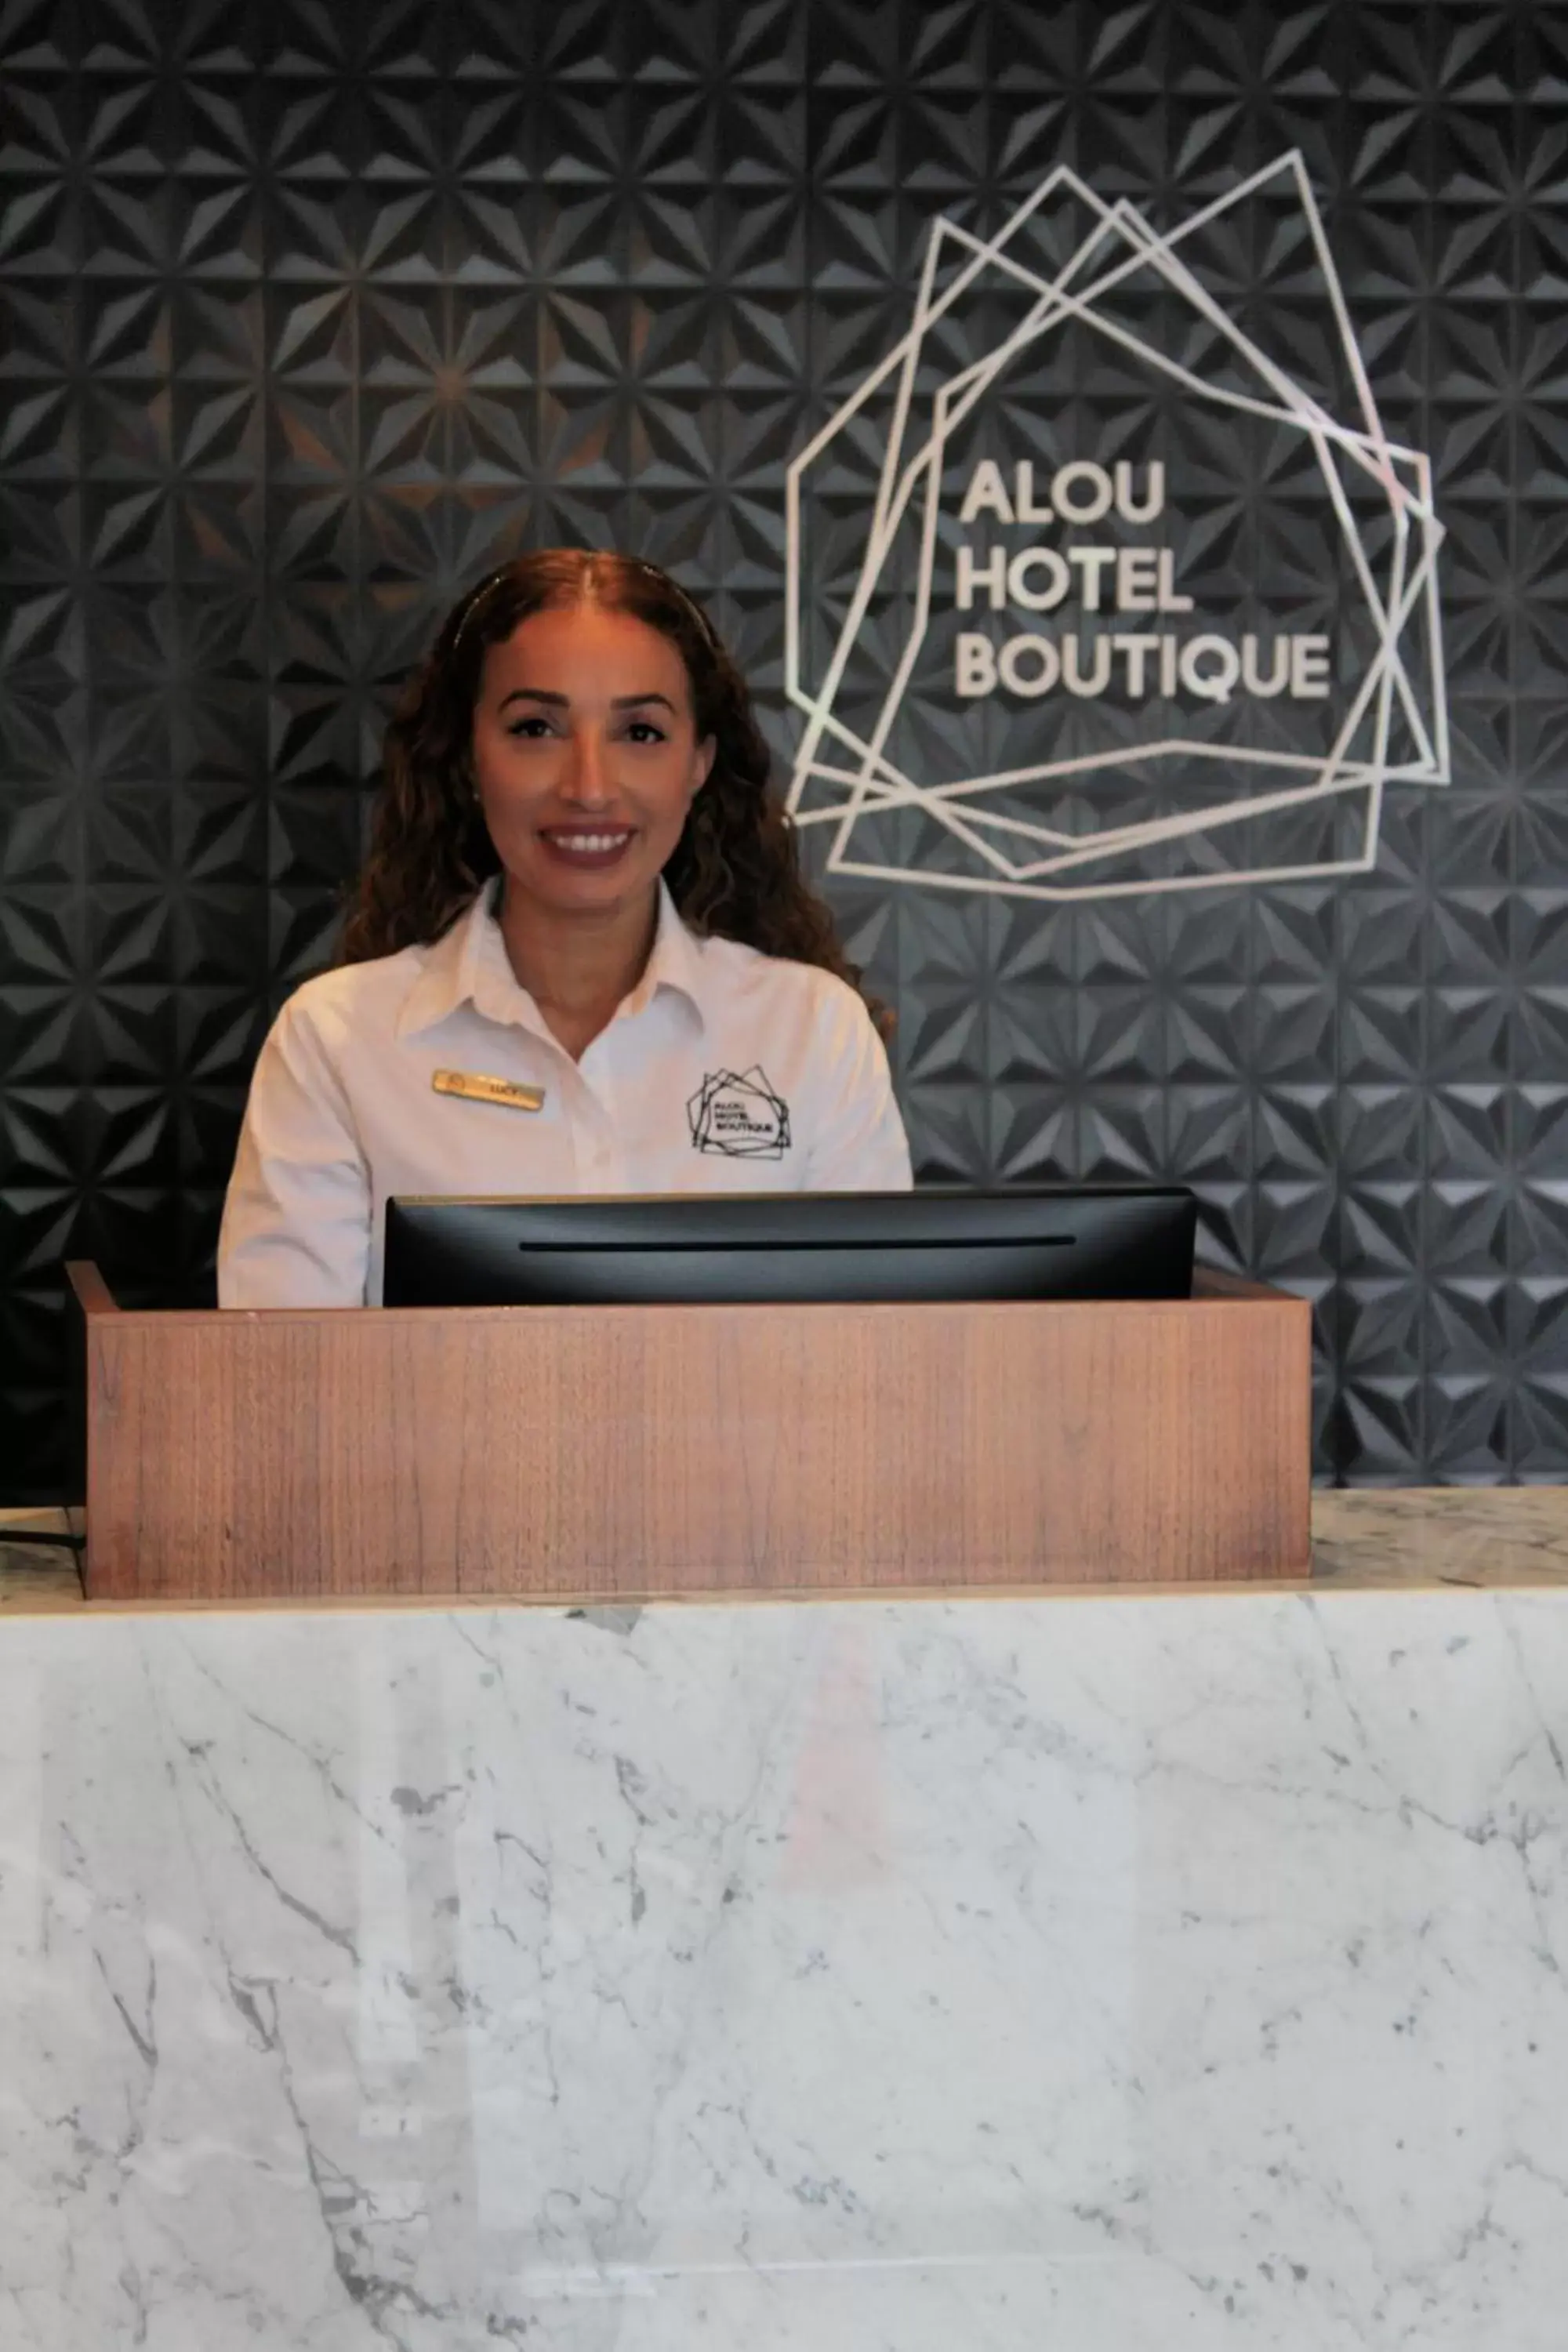 Staff in Alou Hotel Boutique